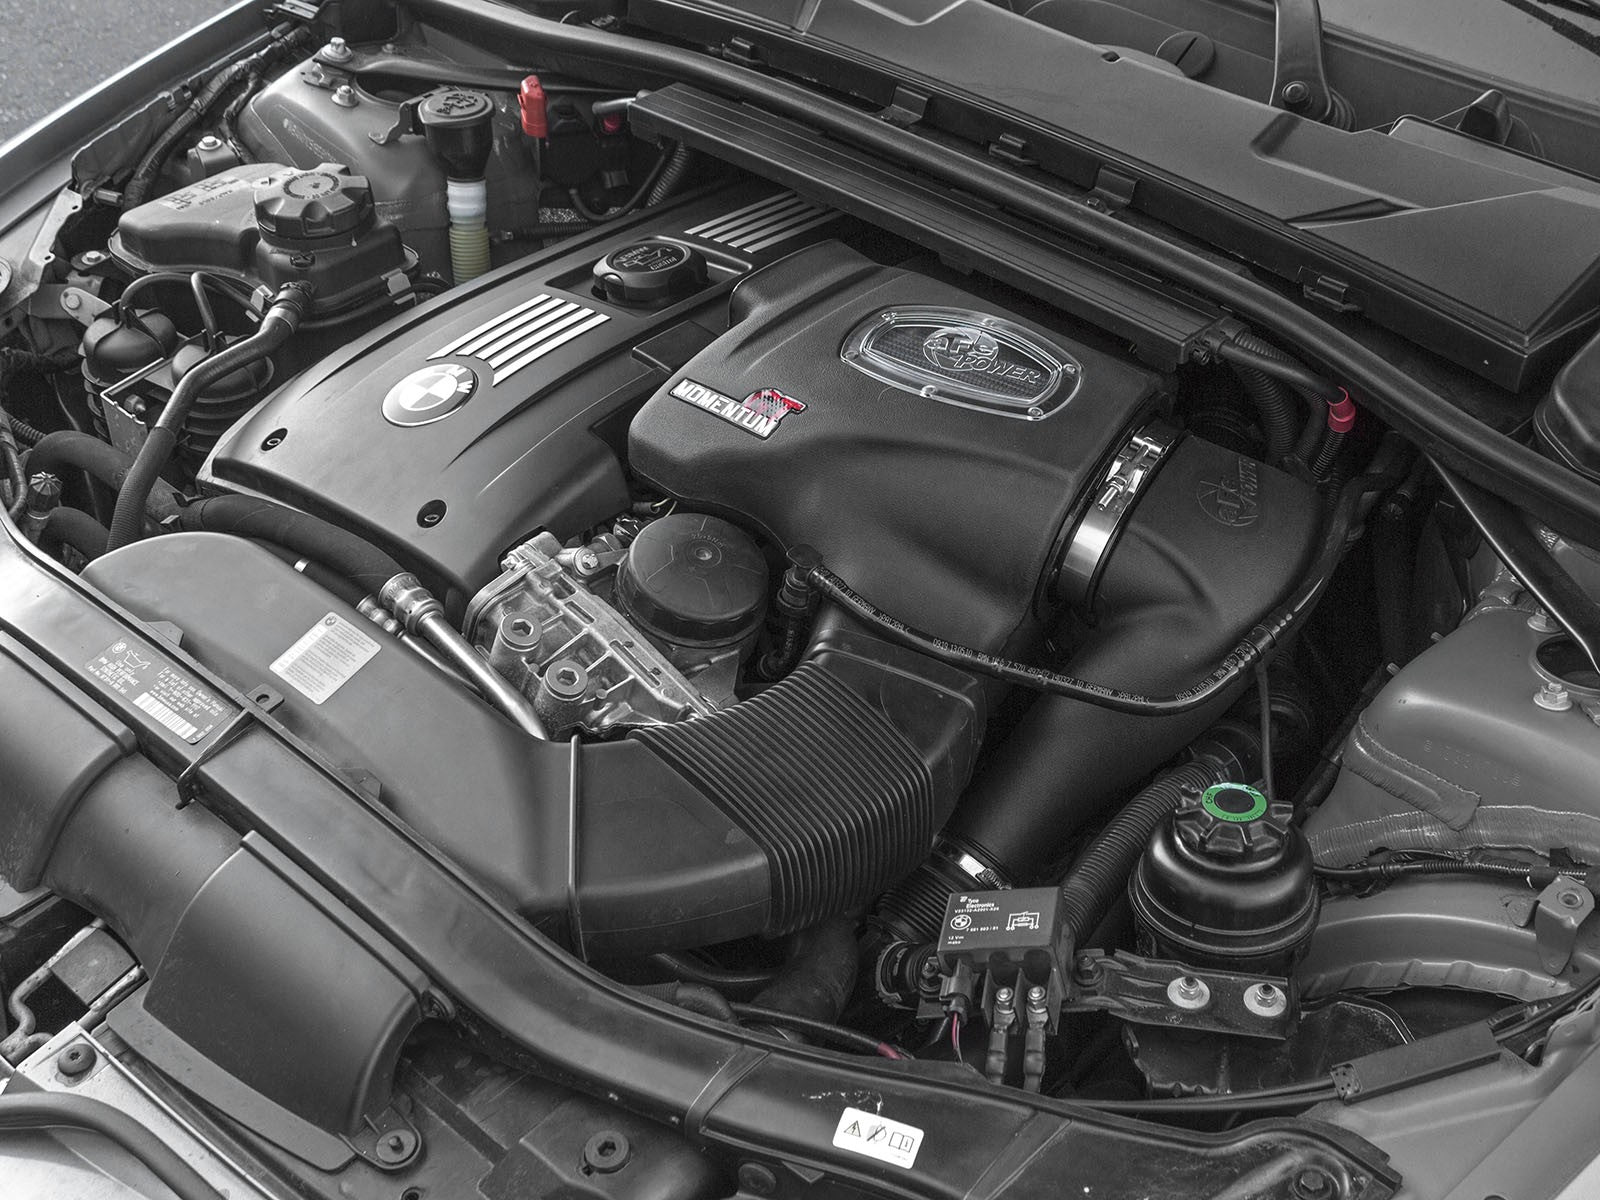 Momentum GT Cold Air Intake System w/ Pro DRY S Media BMW 335i (E90/92/93) 07-10 L6-3.0L (t) N54